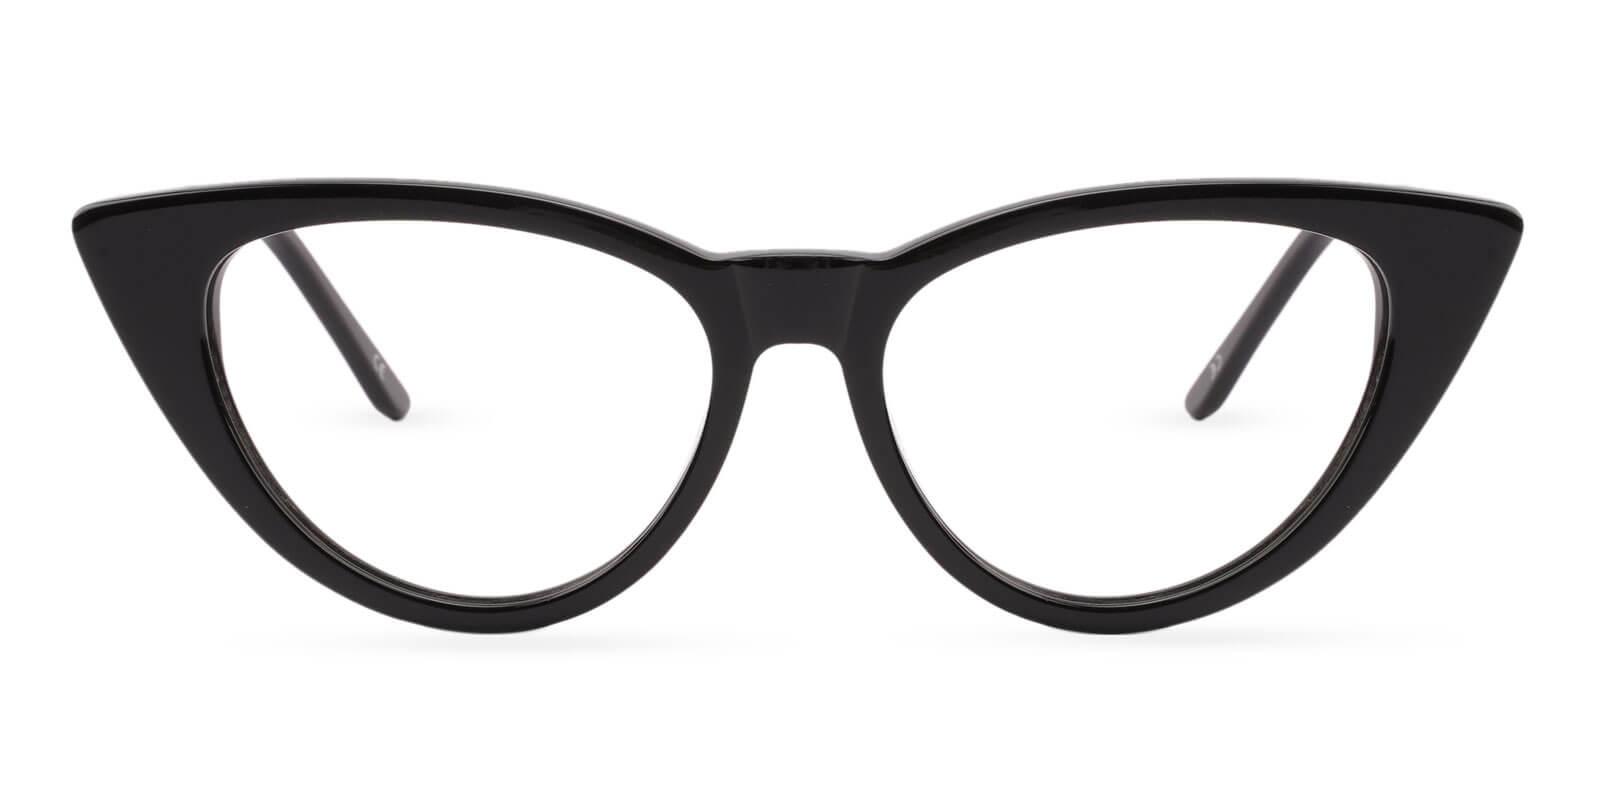 Nora Black Acetate Eyeglasses , SpringHinges , UniversalBridgeFit Frames from ABBE Glasses